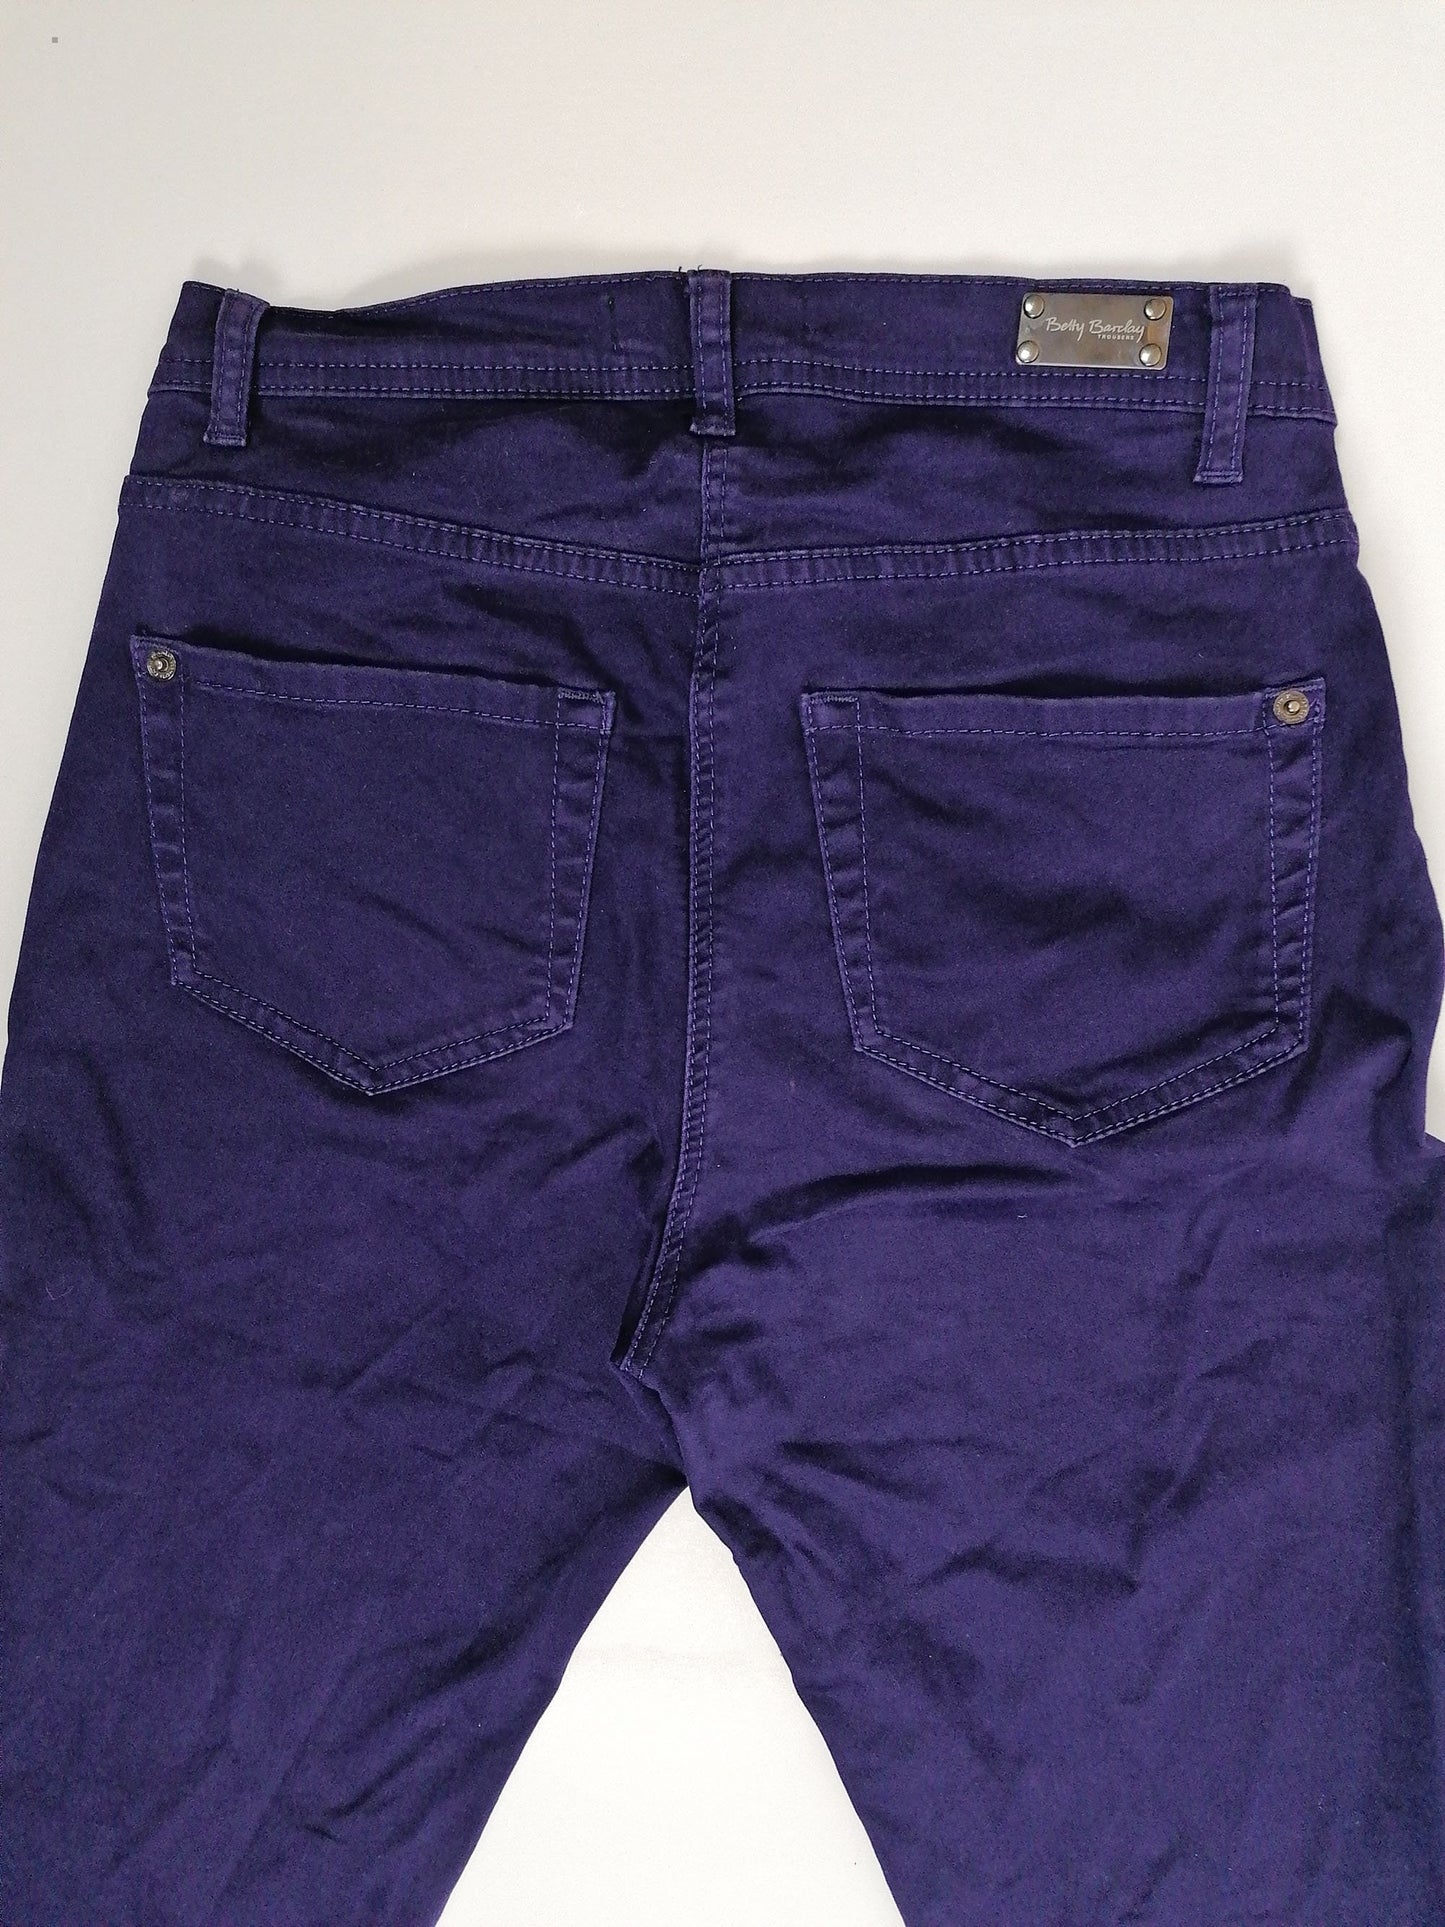 BETTY BARCLAY Indigo Purple Jeans - size S // eu 36 // us 6 // uk 10